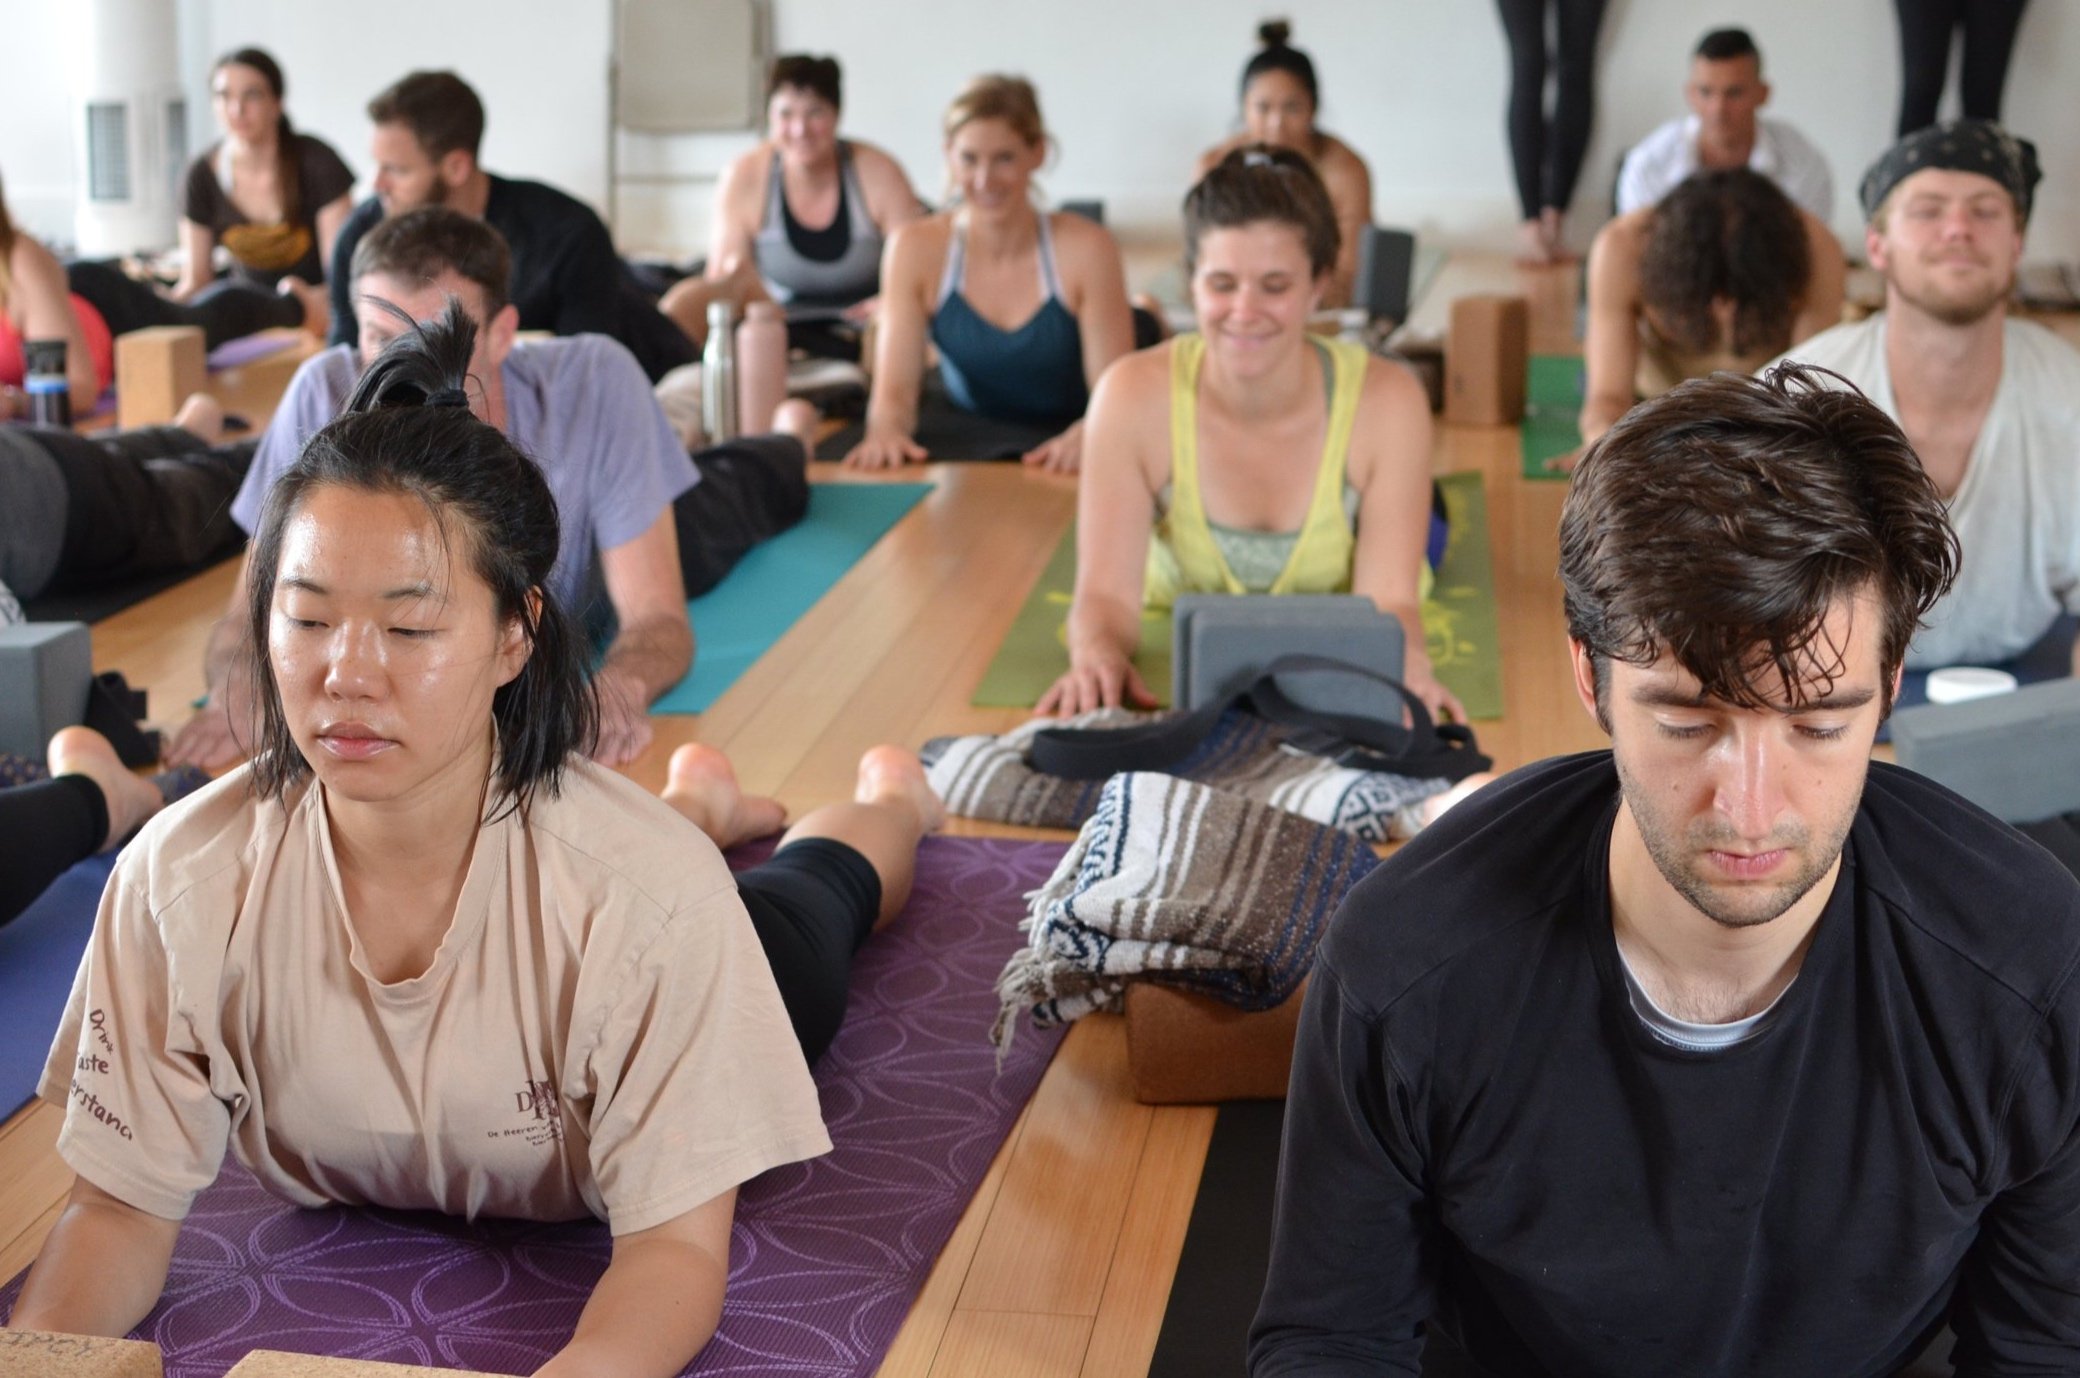 JP Centre Yoga - Community Minded Yoga Studio, Best of Boston 2018